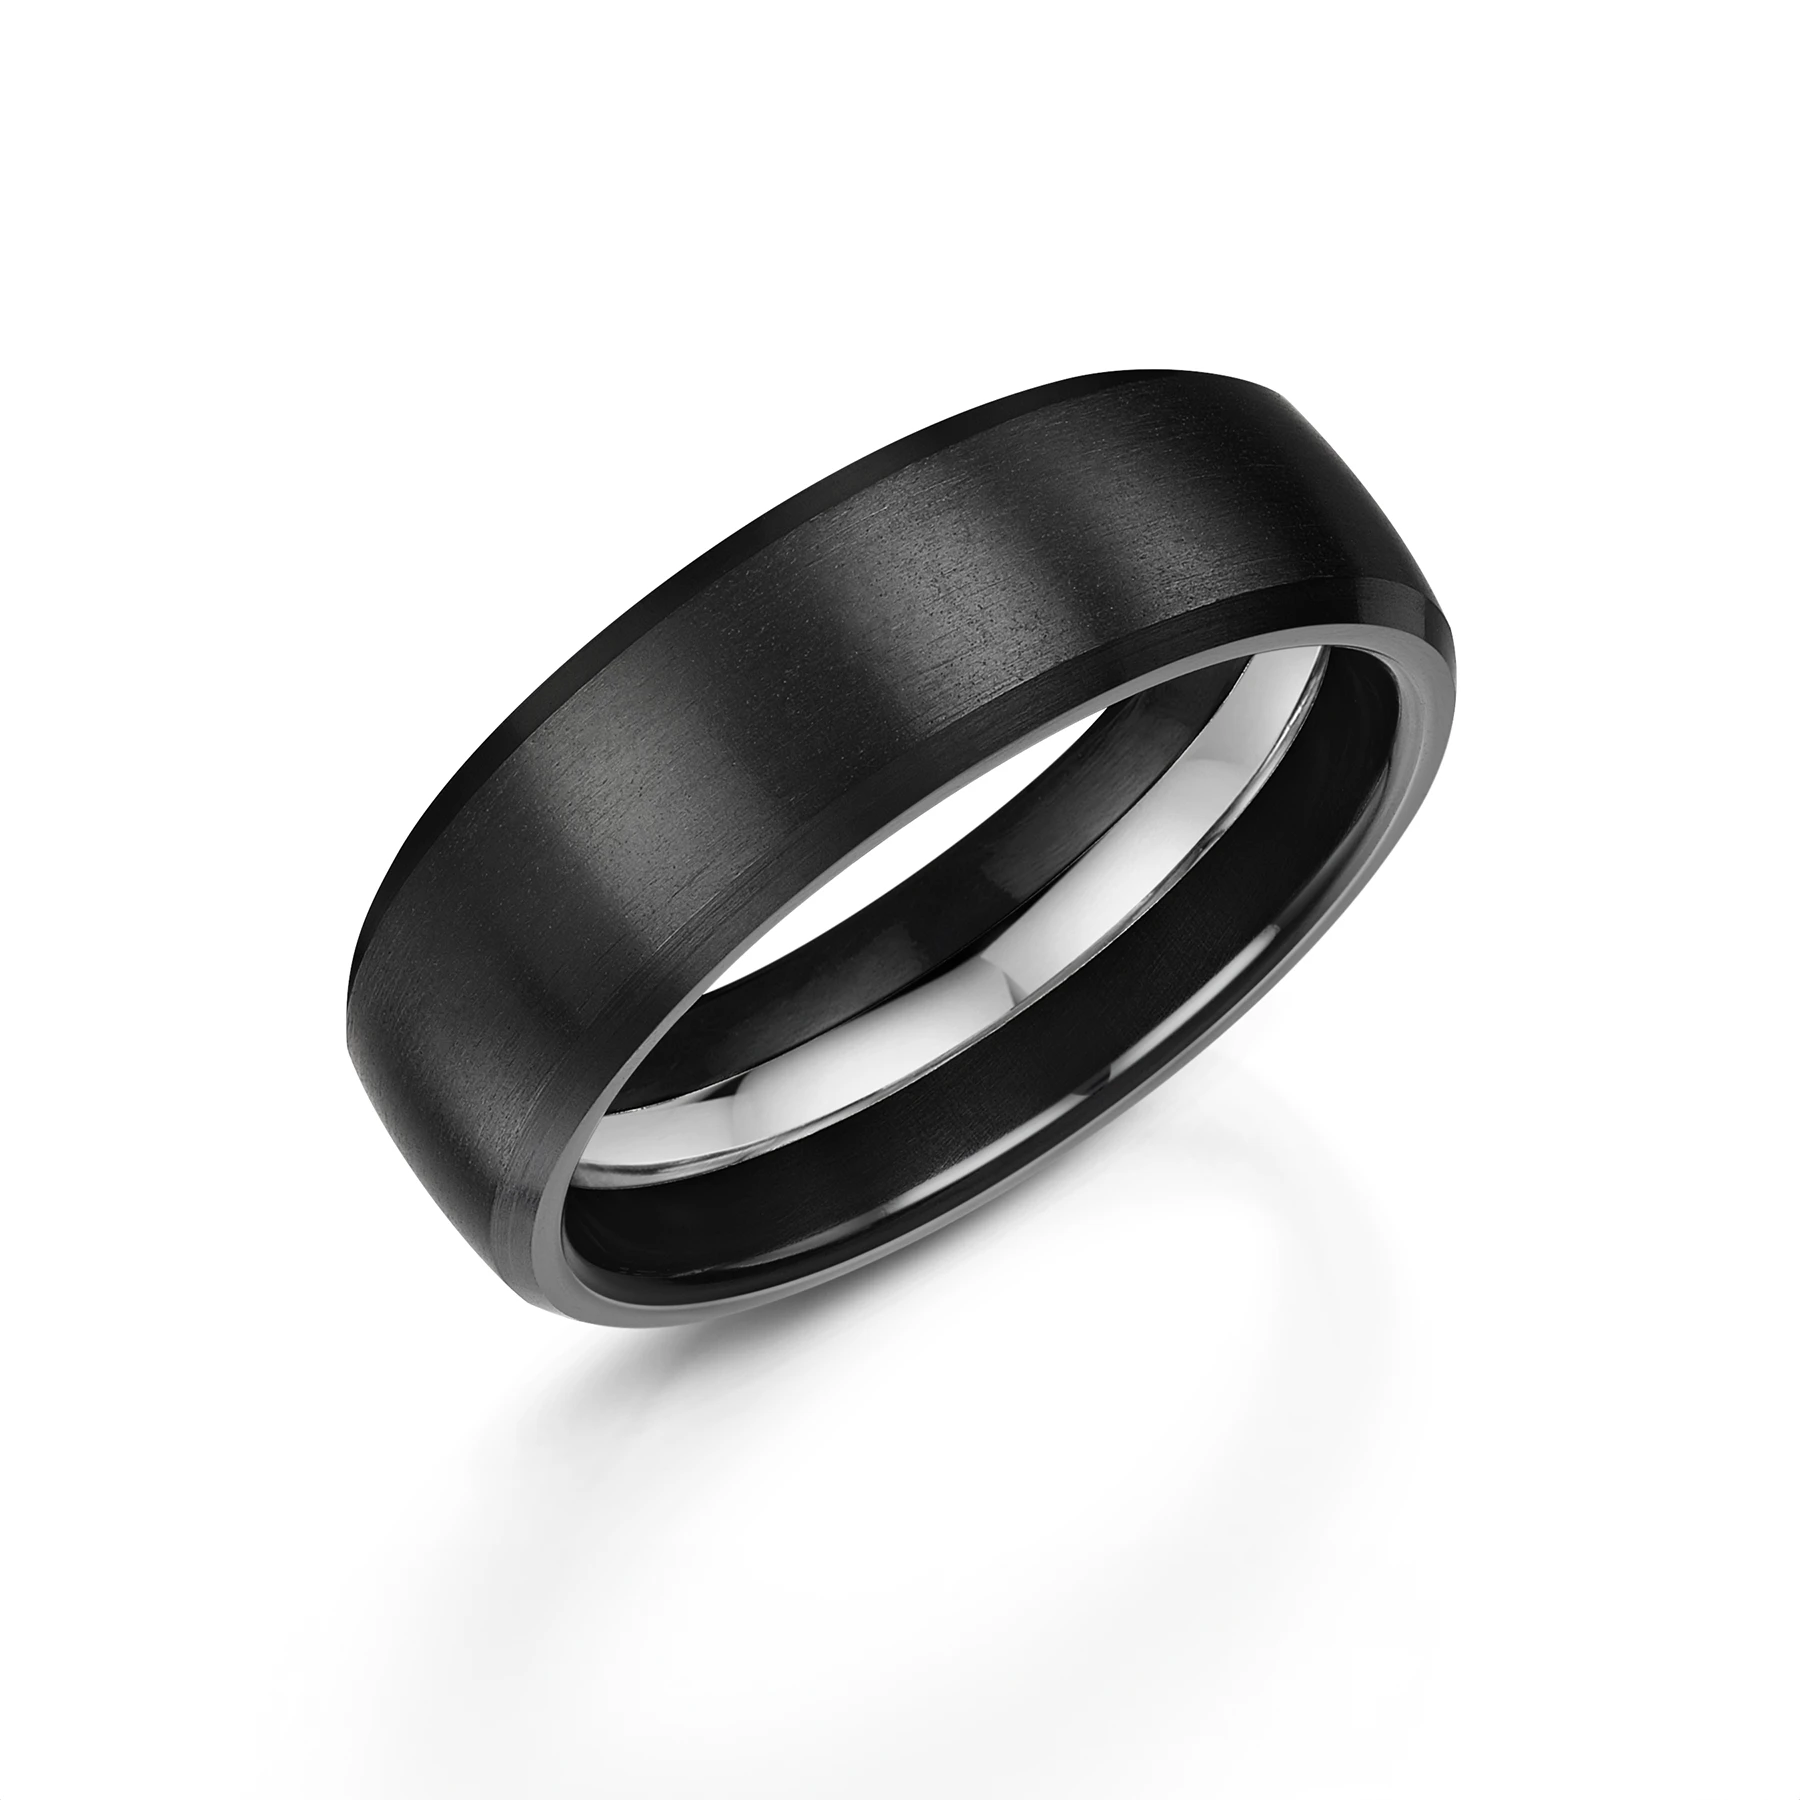 Matte Black Zirconium Wedding Ring with Inner Silver Inlay